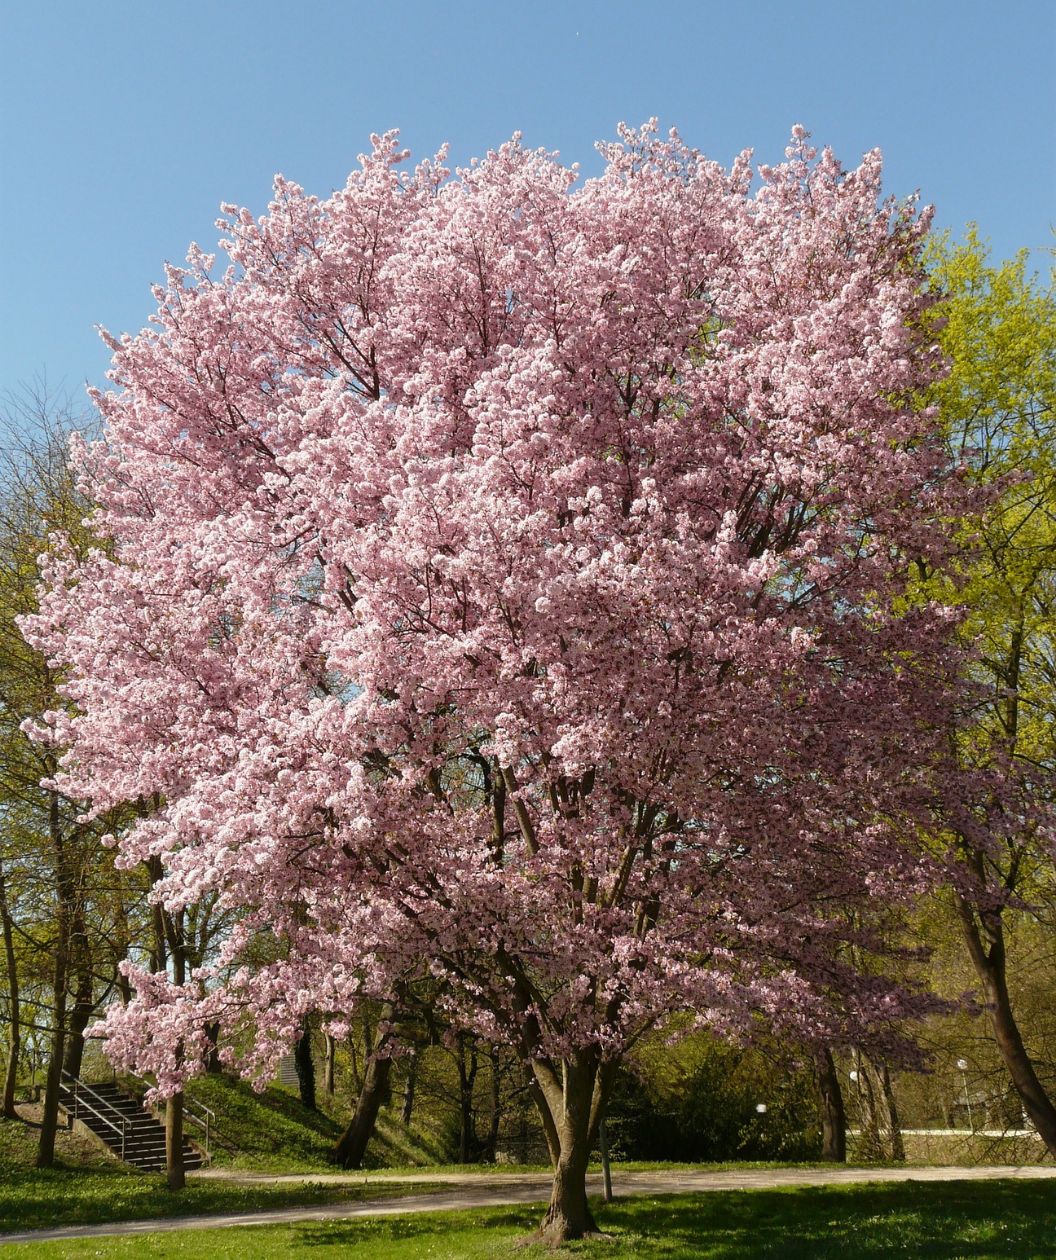 Late Season Flowering Cherry Trees for Your Garden